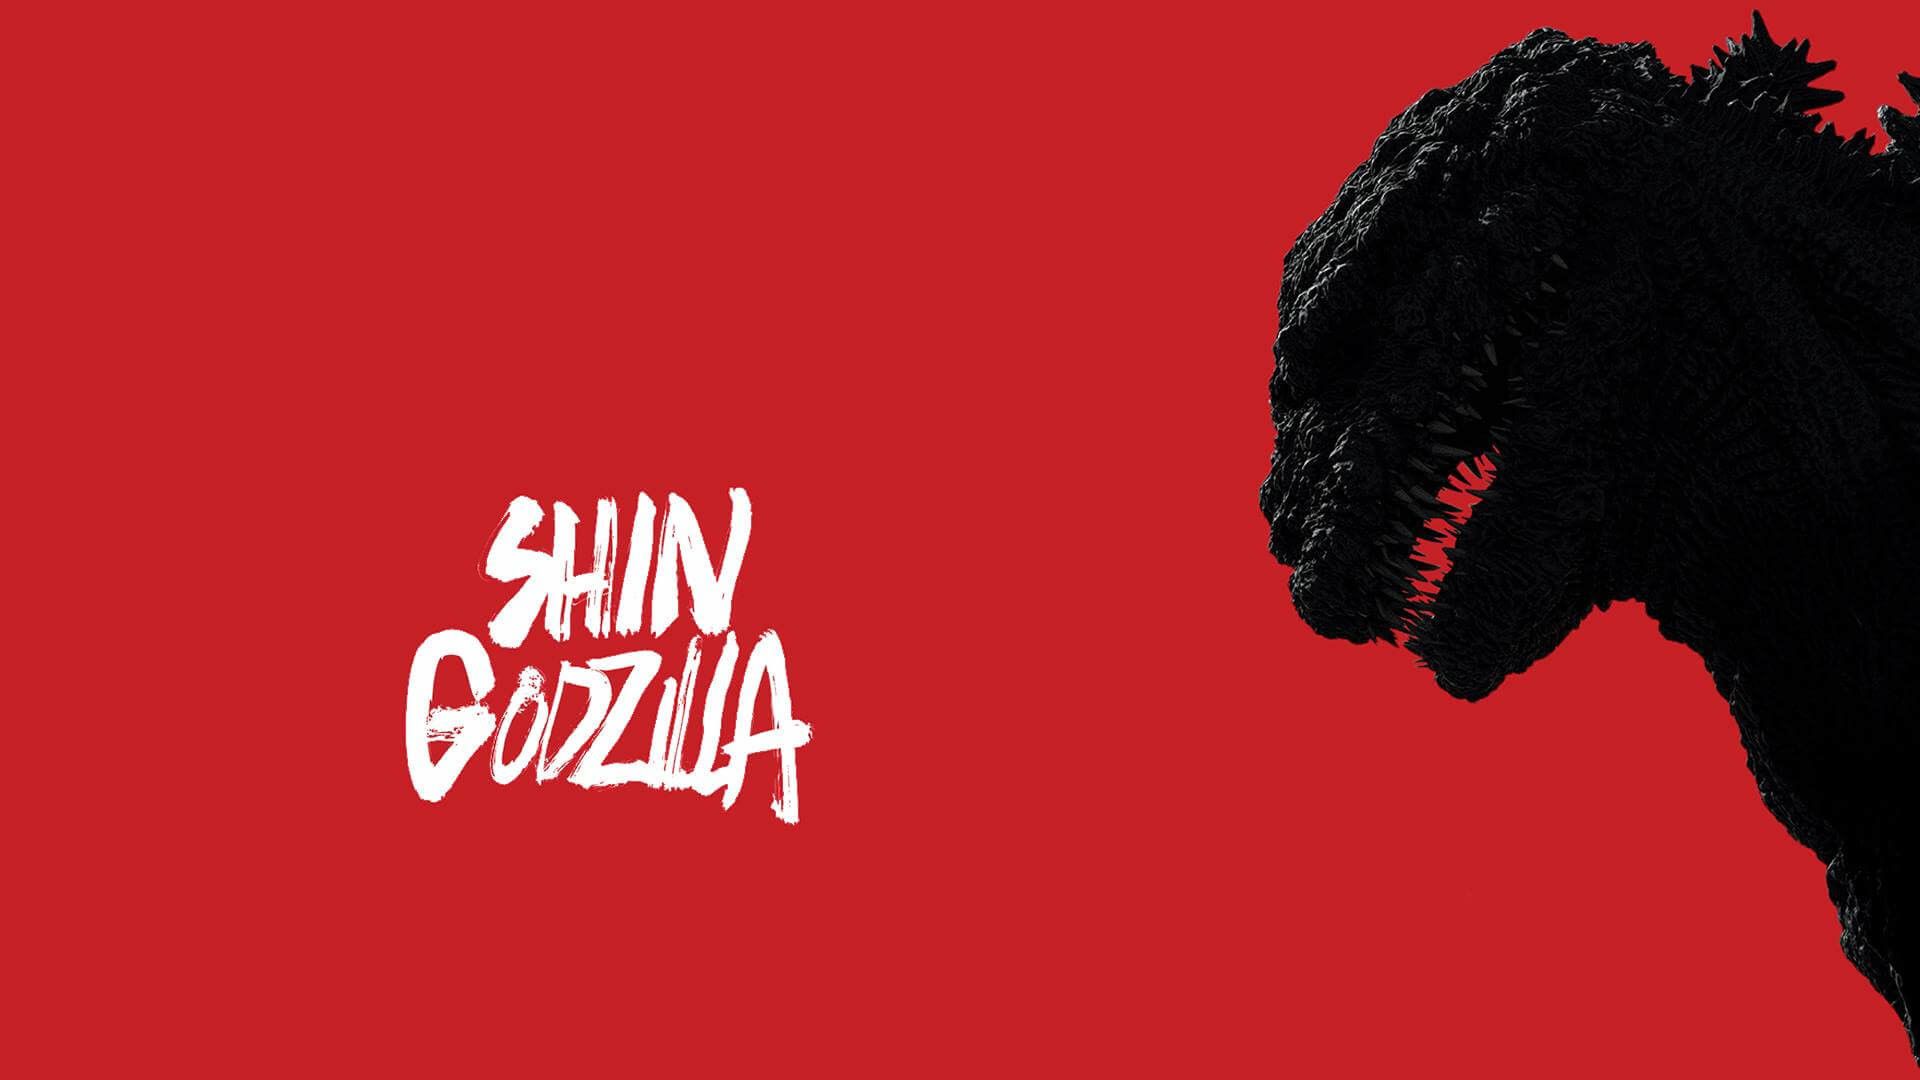 Shin Godzilla Wallpaper background picture